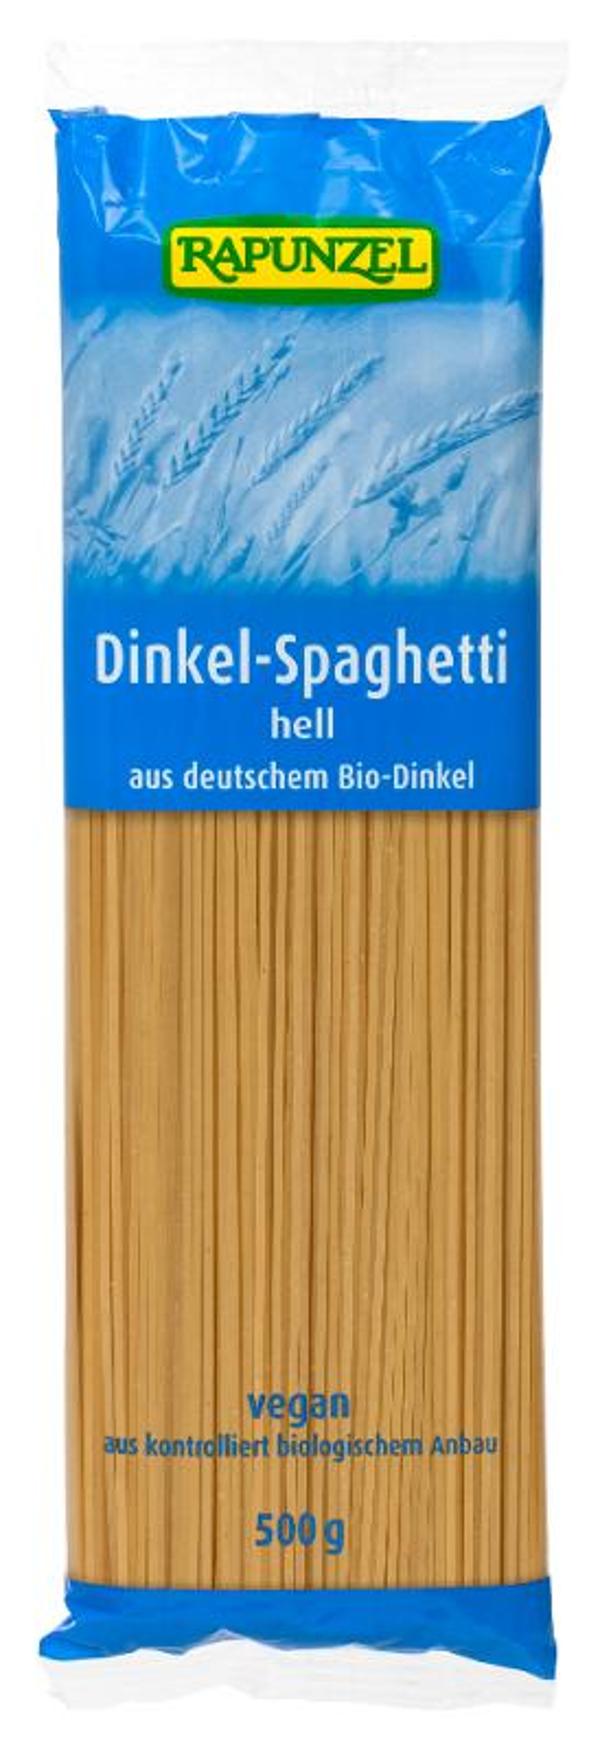 Produktfoto zu Dinkel Spaghetti (hell)